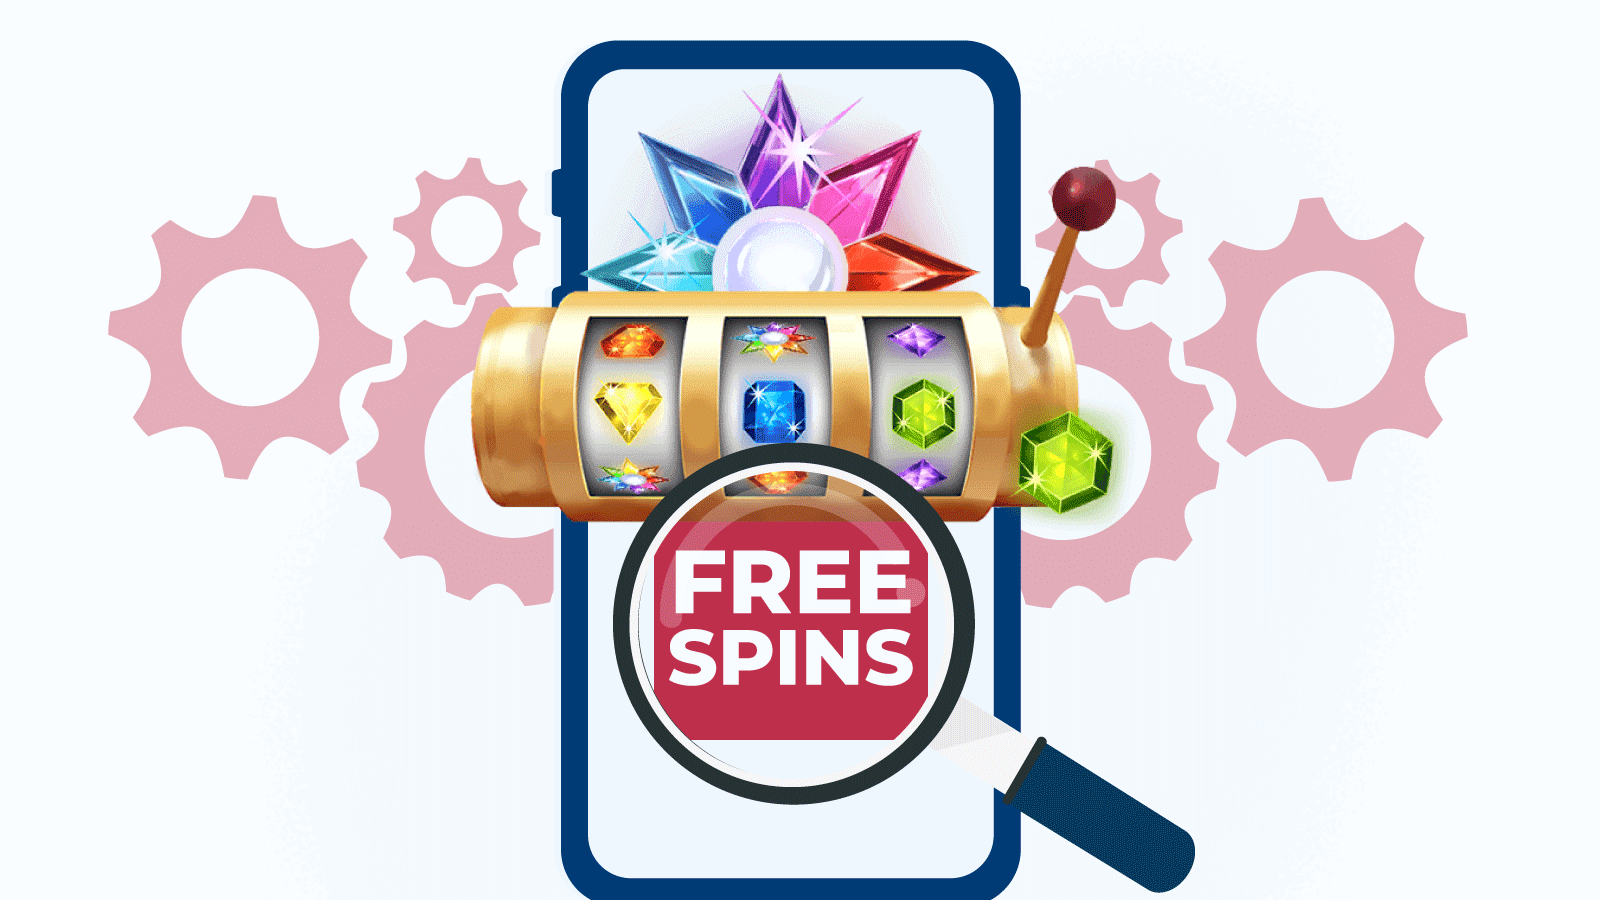 Free spins on Starburst no deposit mobile casinos